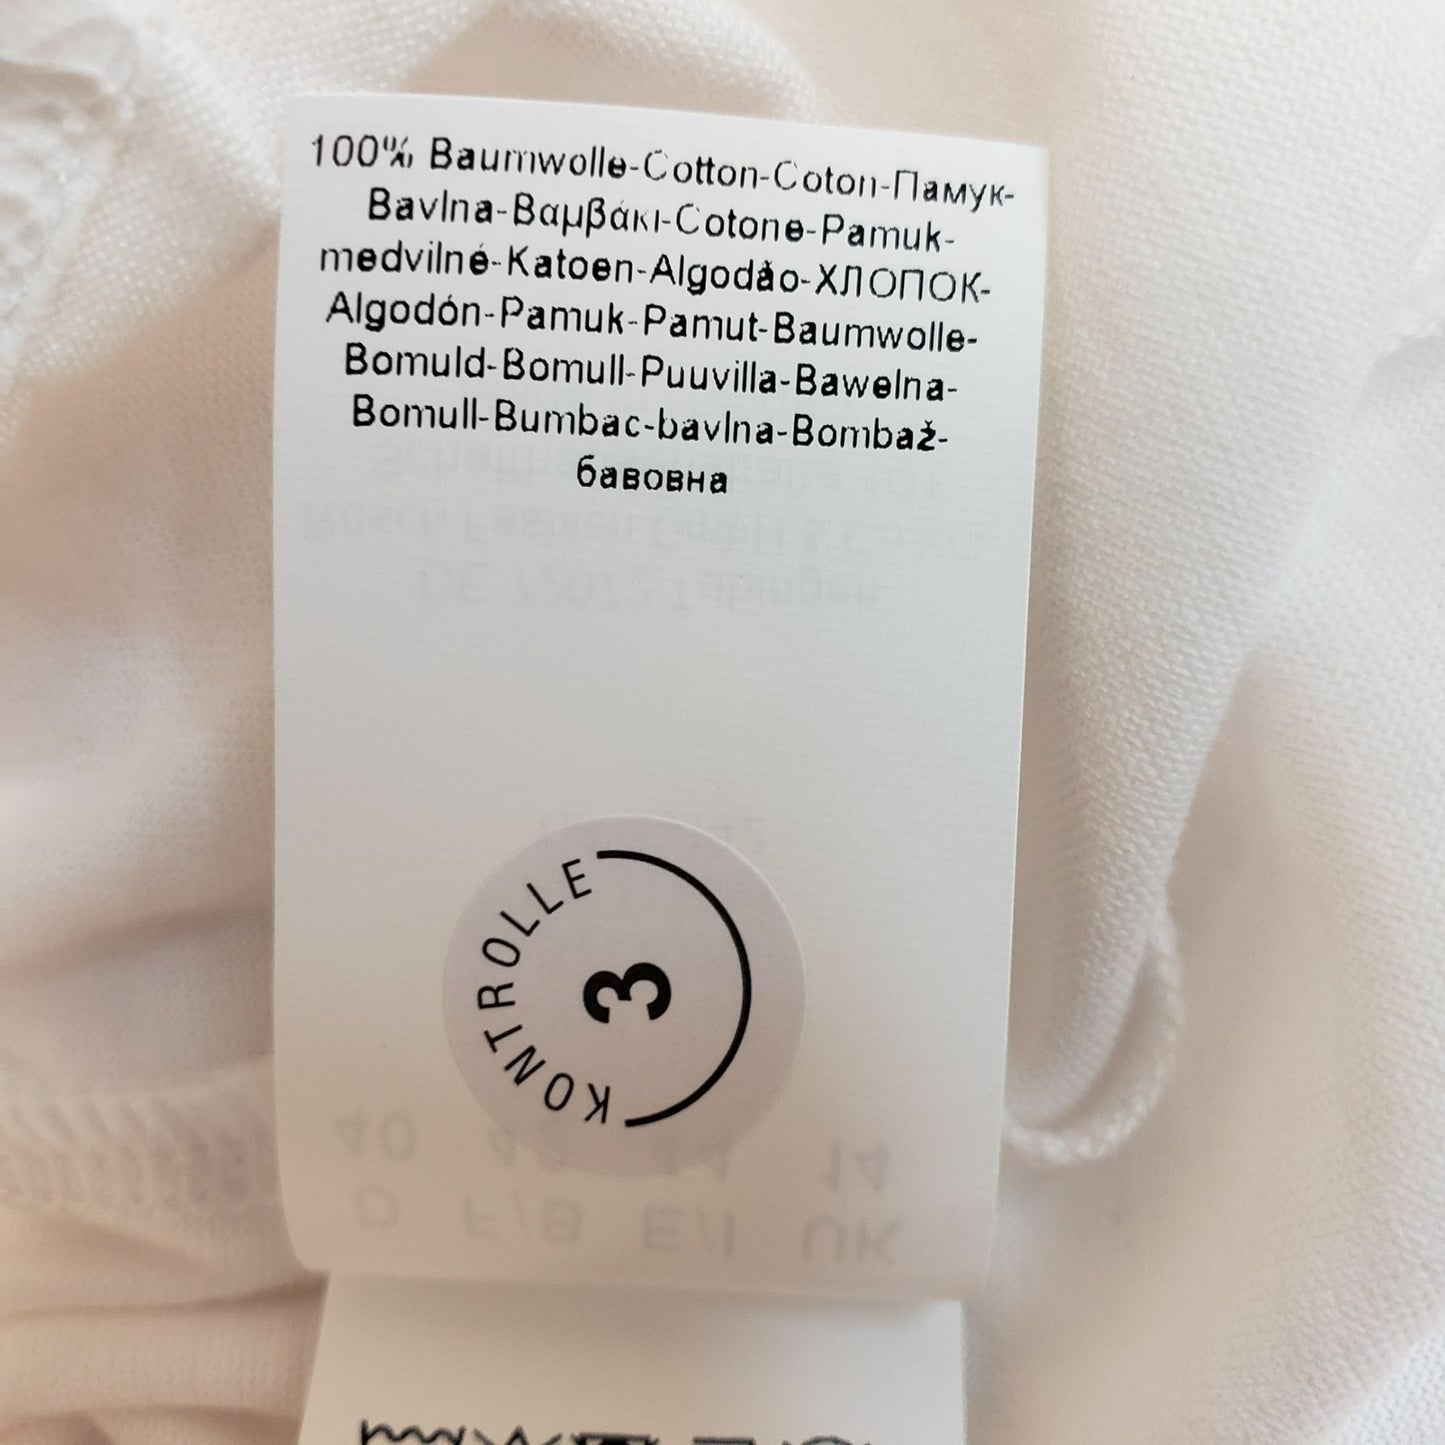 Feraud Paris Satin Trim Sleepwear Intimates Set Size 12/Large